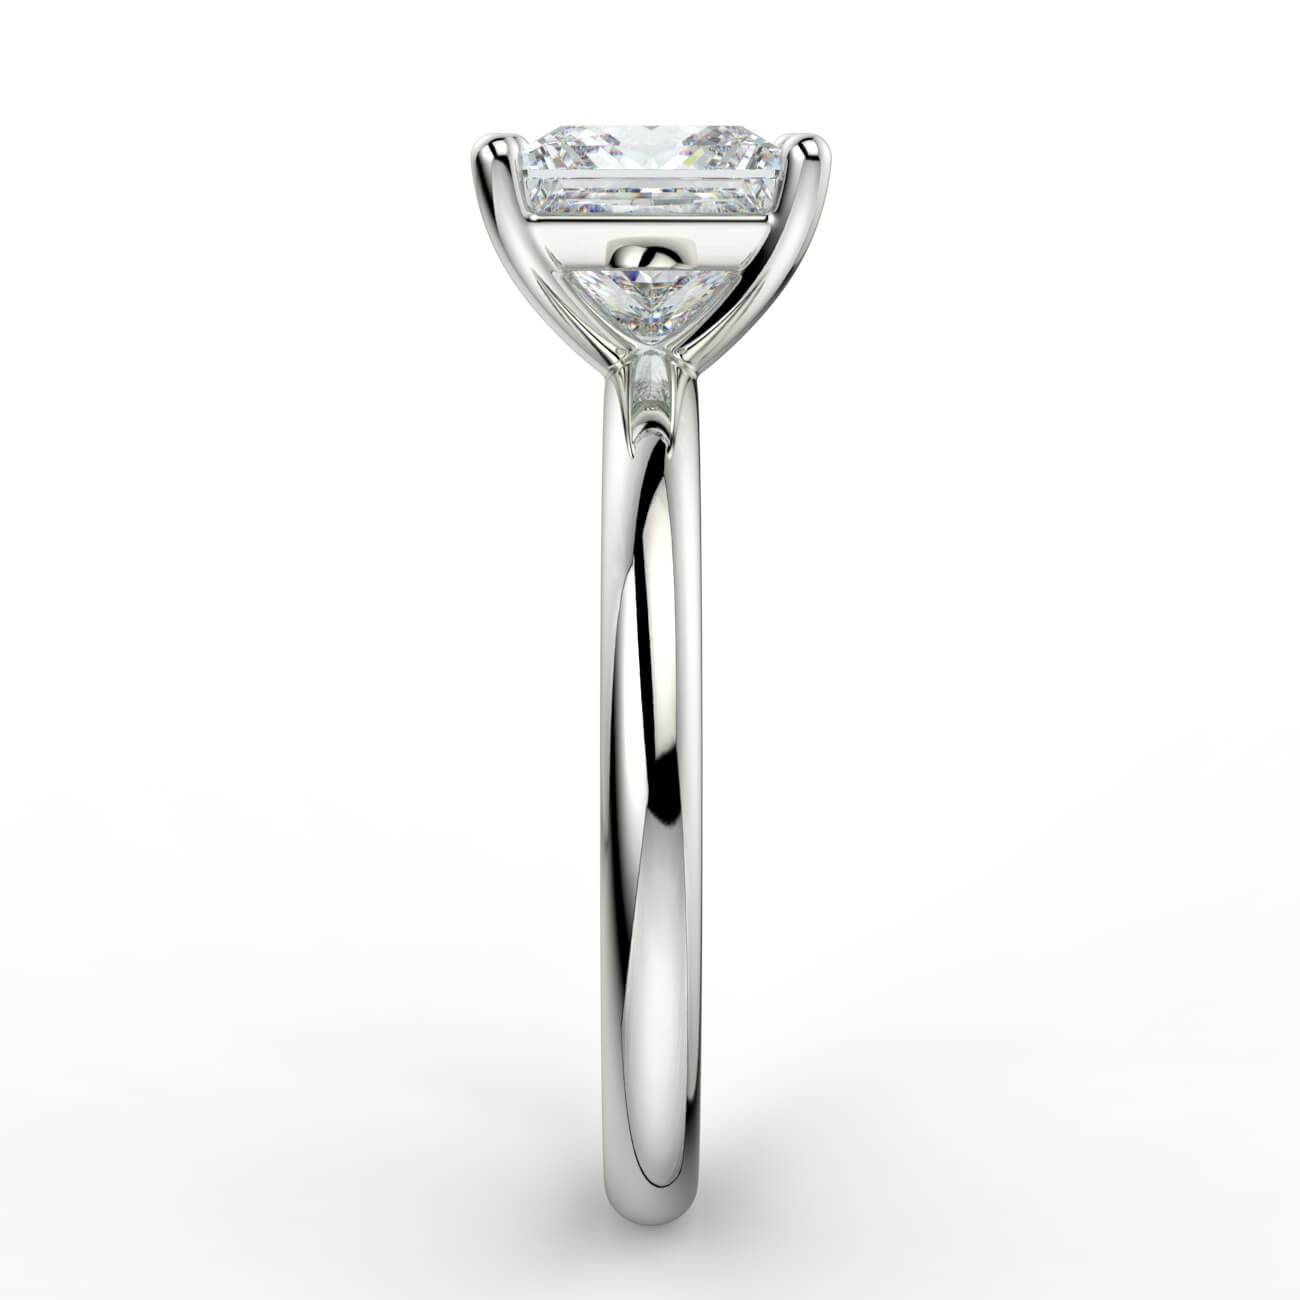 Solitaire princess cut diamond engagement ring in white gold – Australian Diamond Network